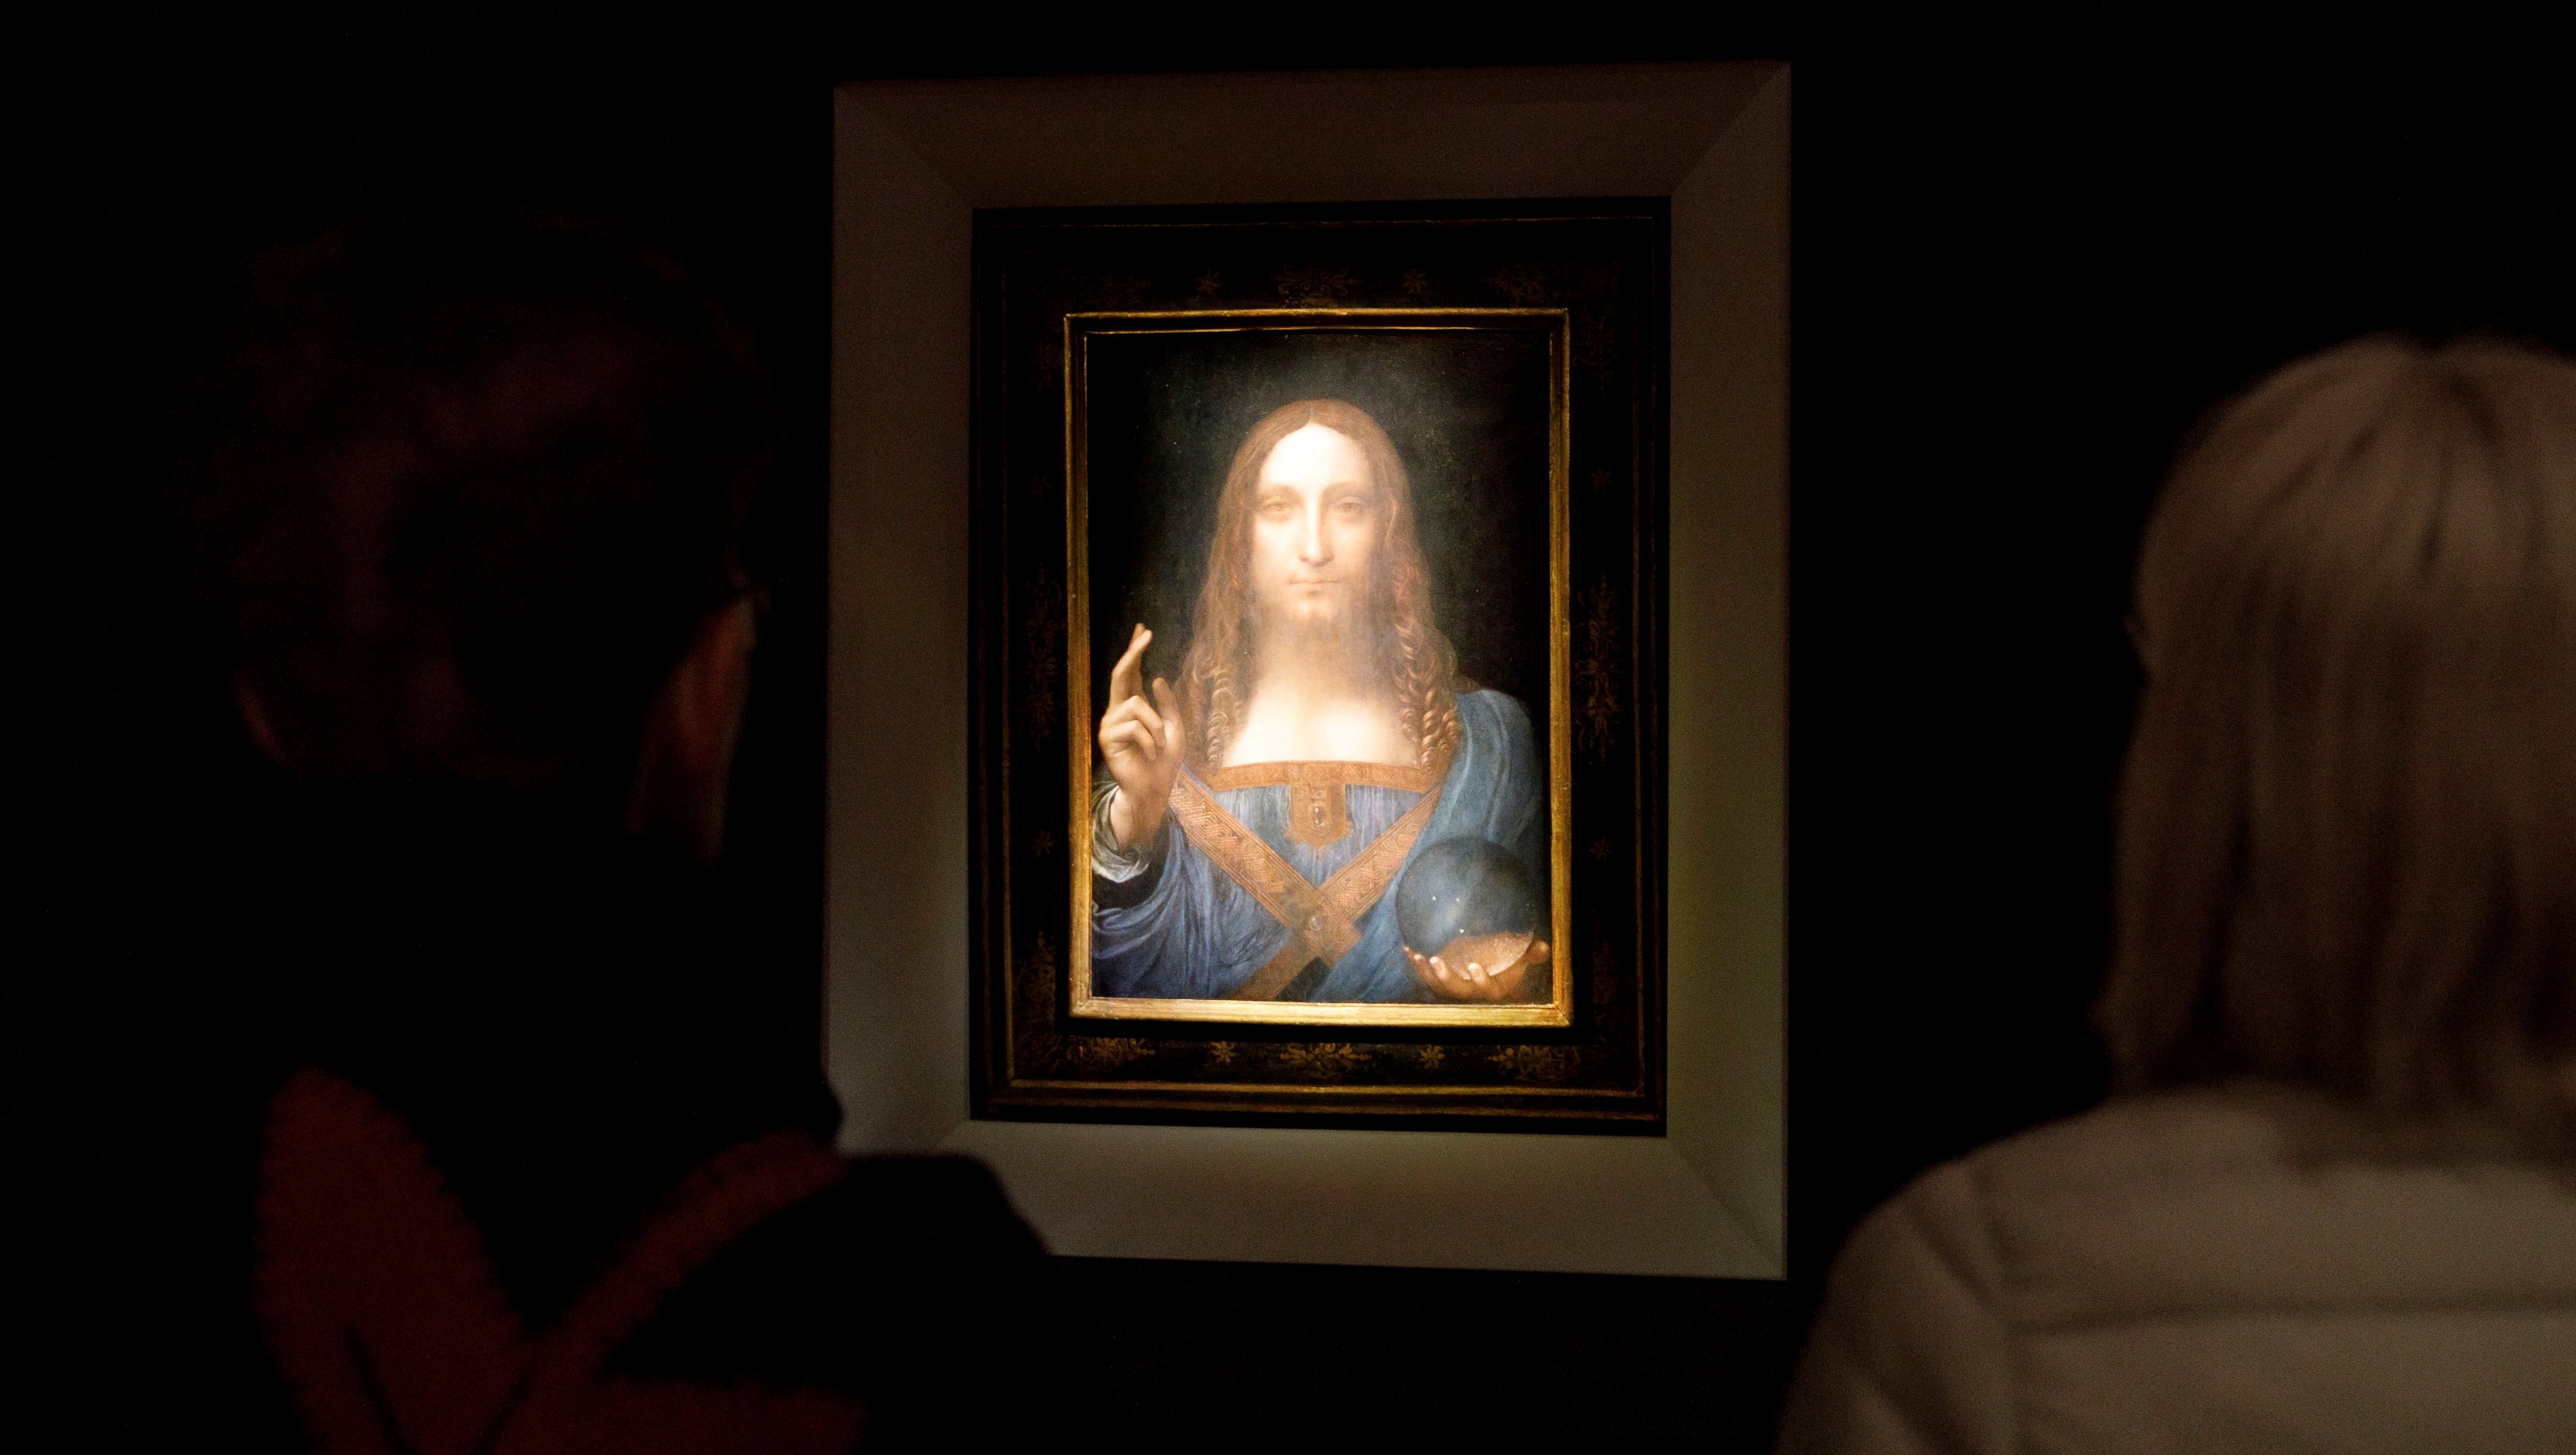  ‘Salvator Mundi’, de Leonardo da Vinci, encabeza la lista de las obras más caras de la historia